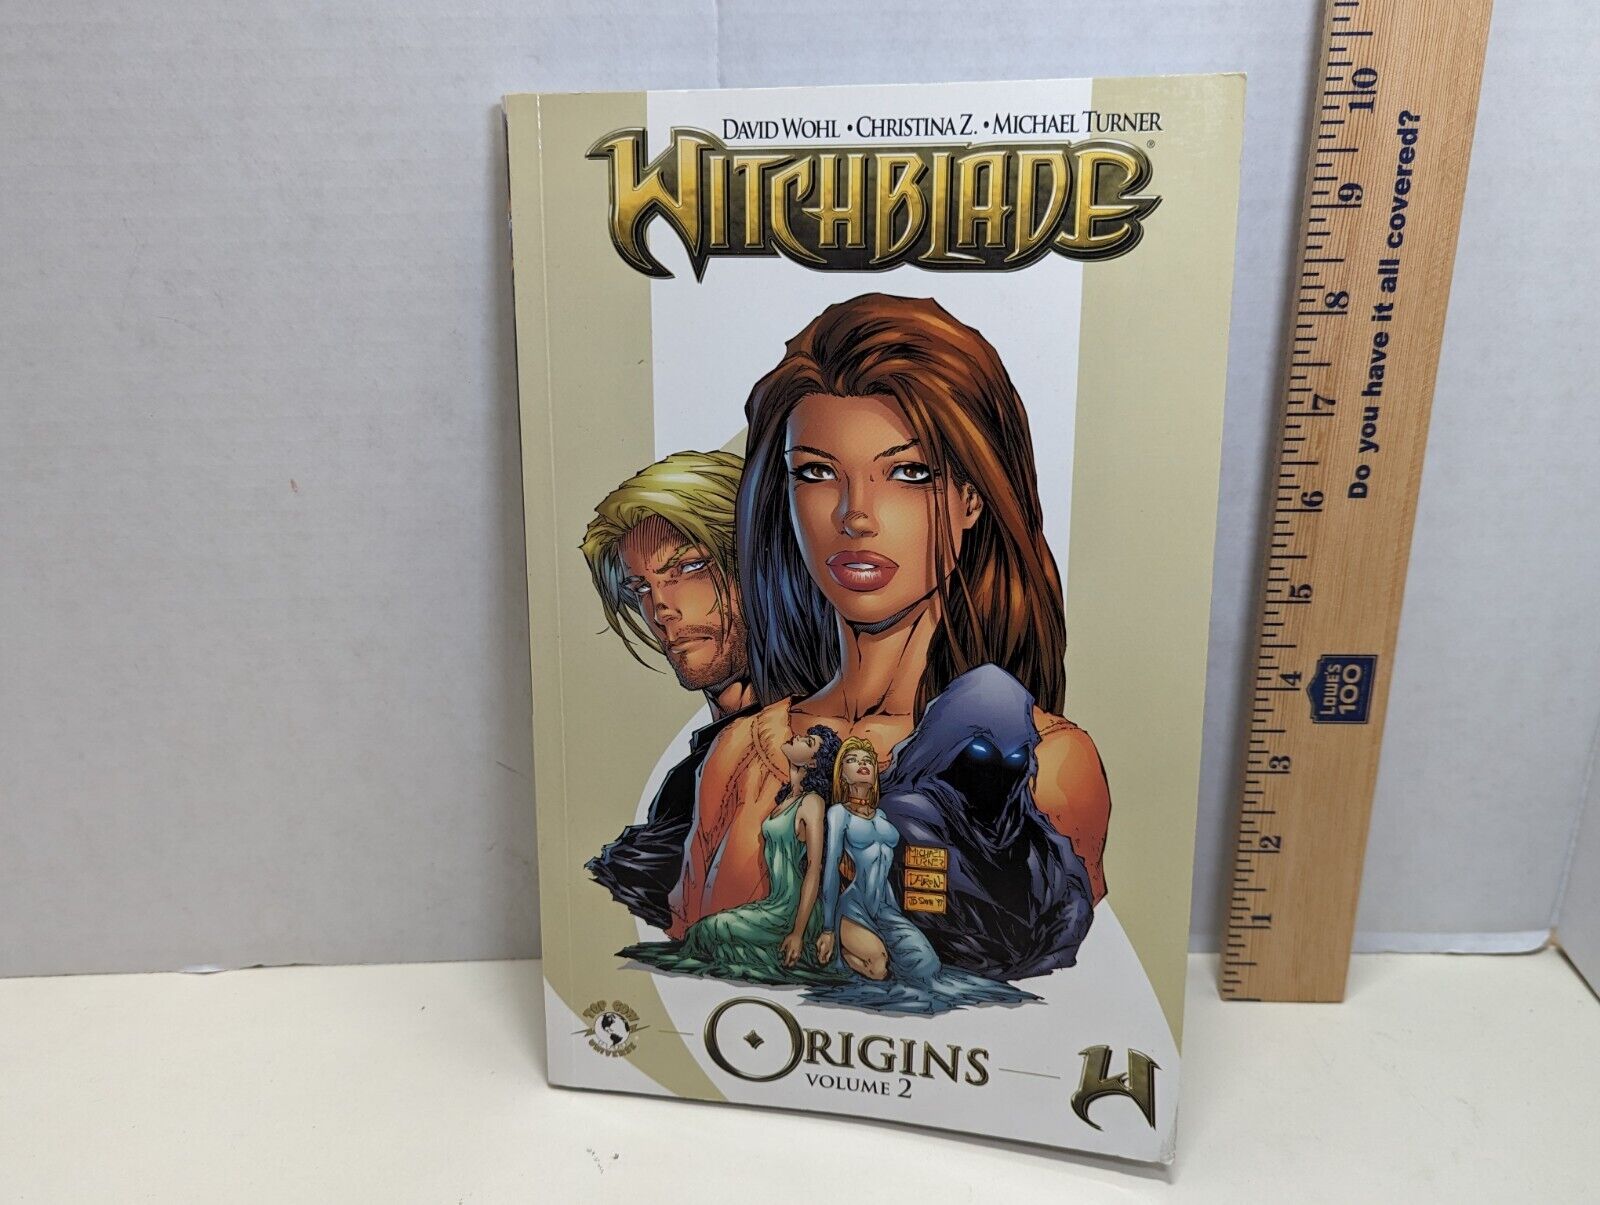 Witchblade Origins Vol. 2 by David Wohl and Christina Z. 2009, Paperback